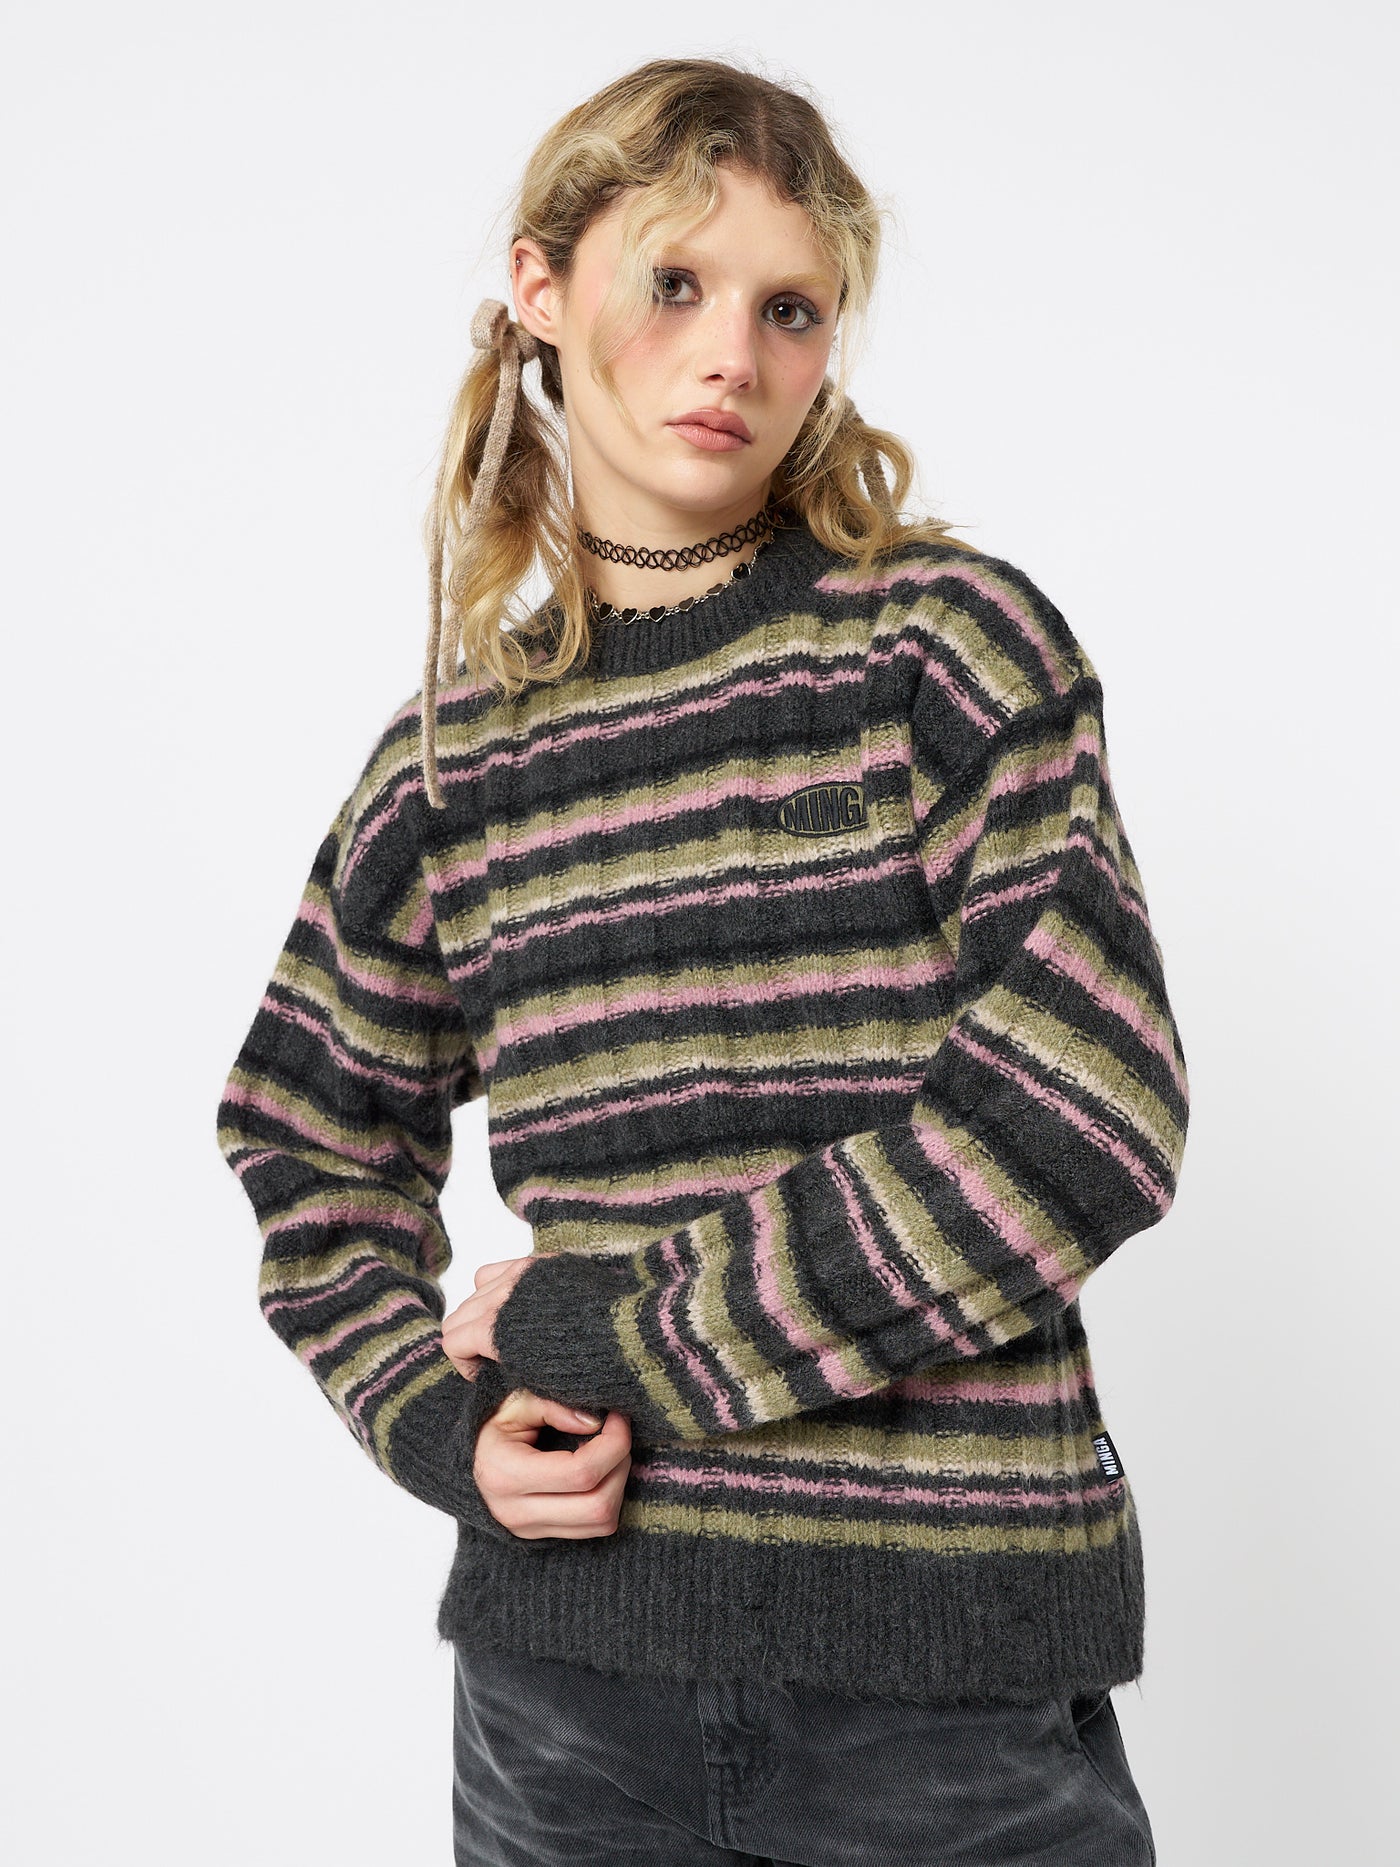 Evelyn Striped Knit Sweater - Minga London